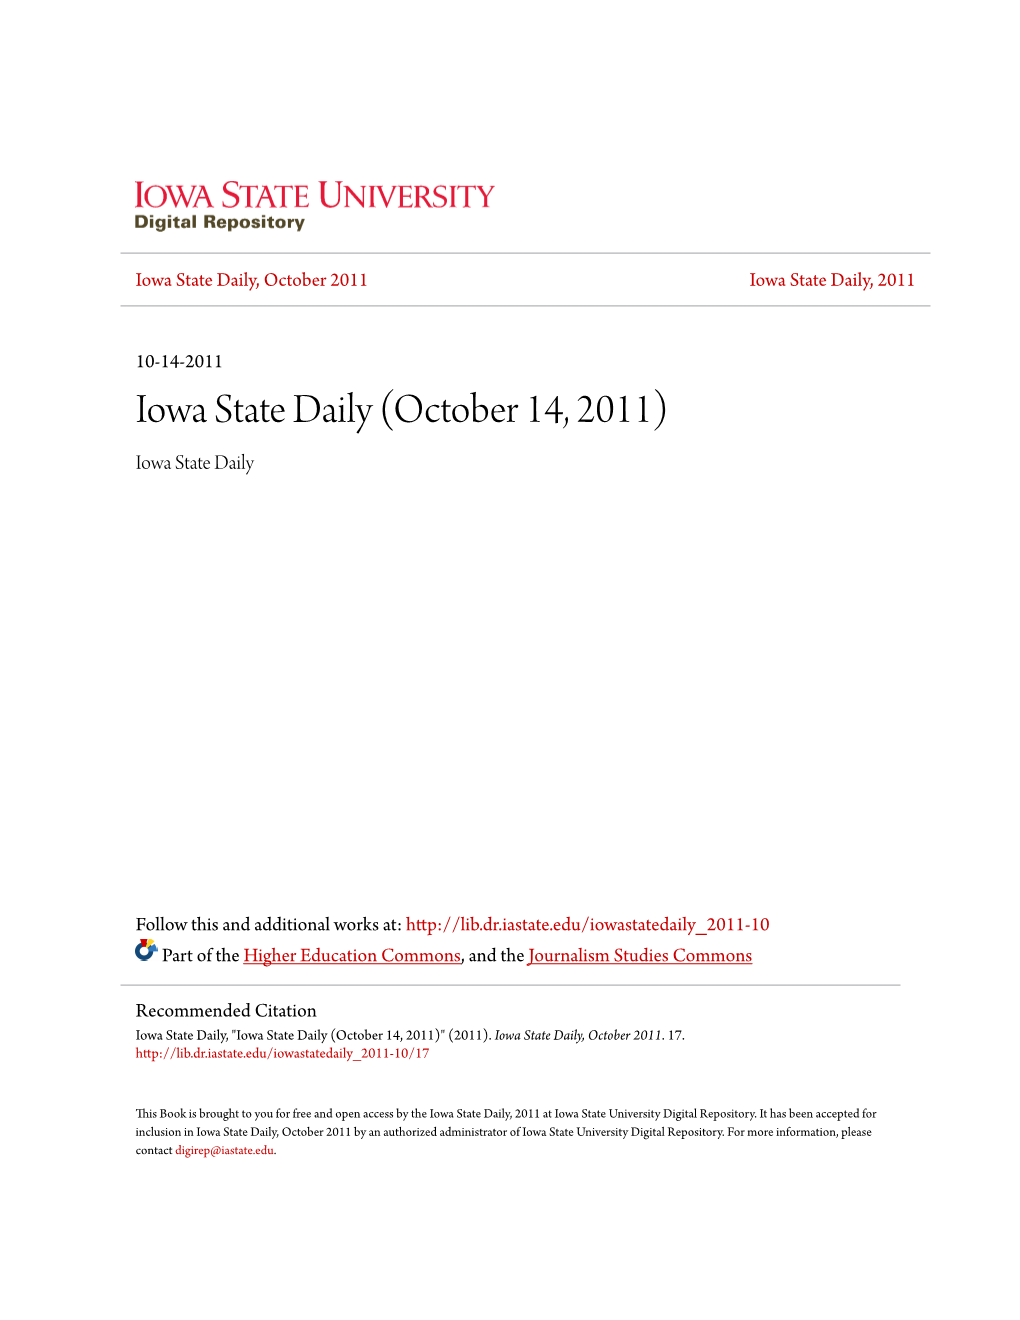 Iowa State Daily (October 14, 2011) Iowa State Daily